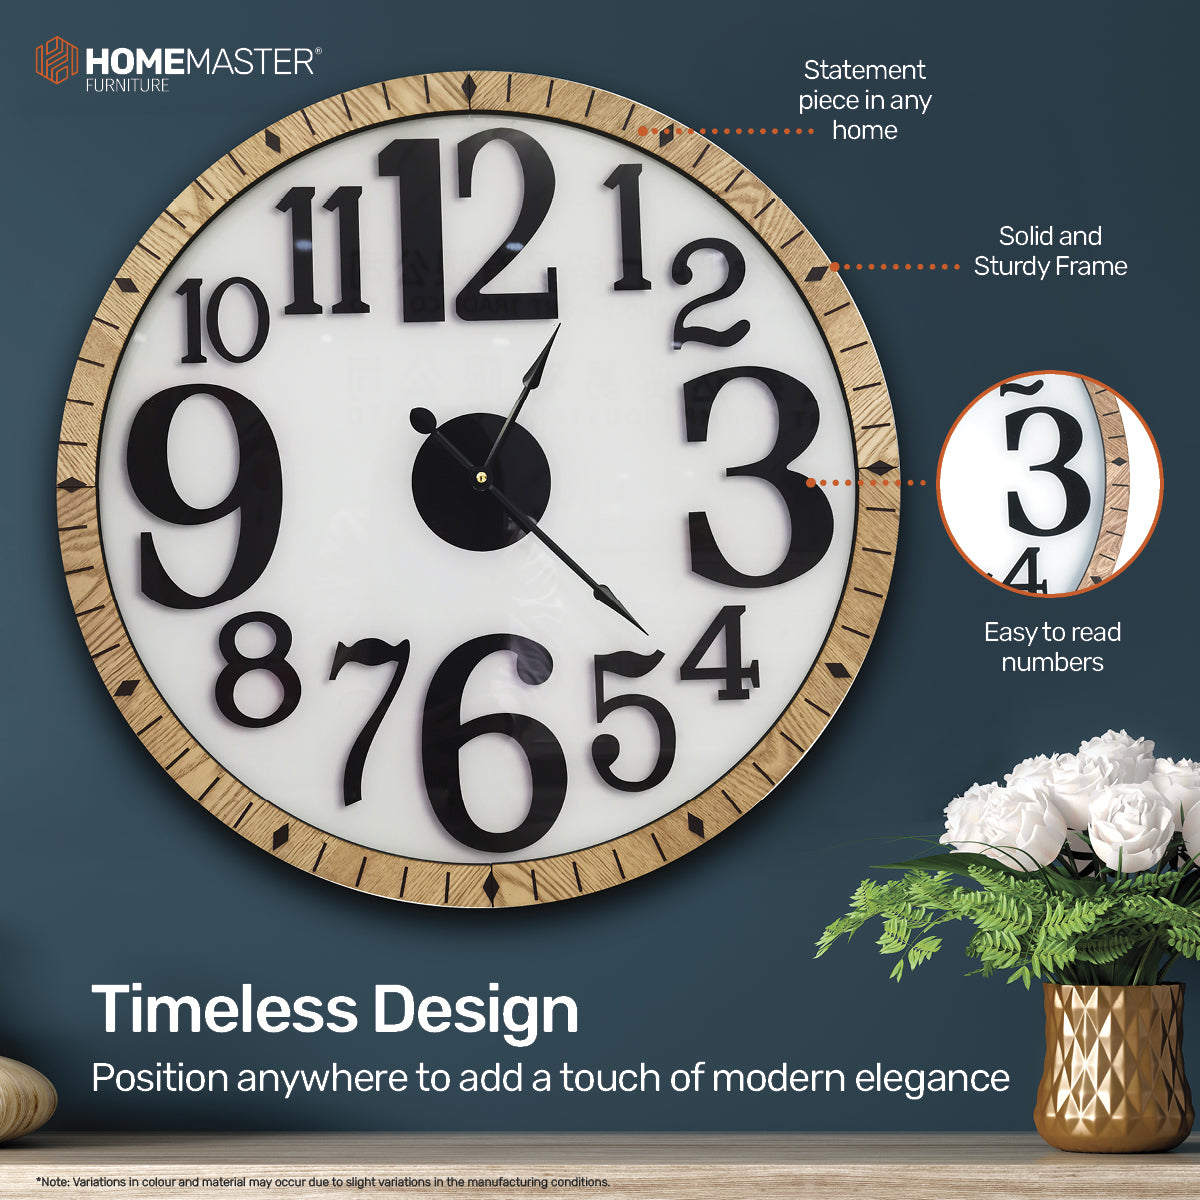 Home Master Wall Clock Large Modern Design Stylish Glass Surface 60cm